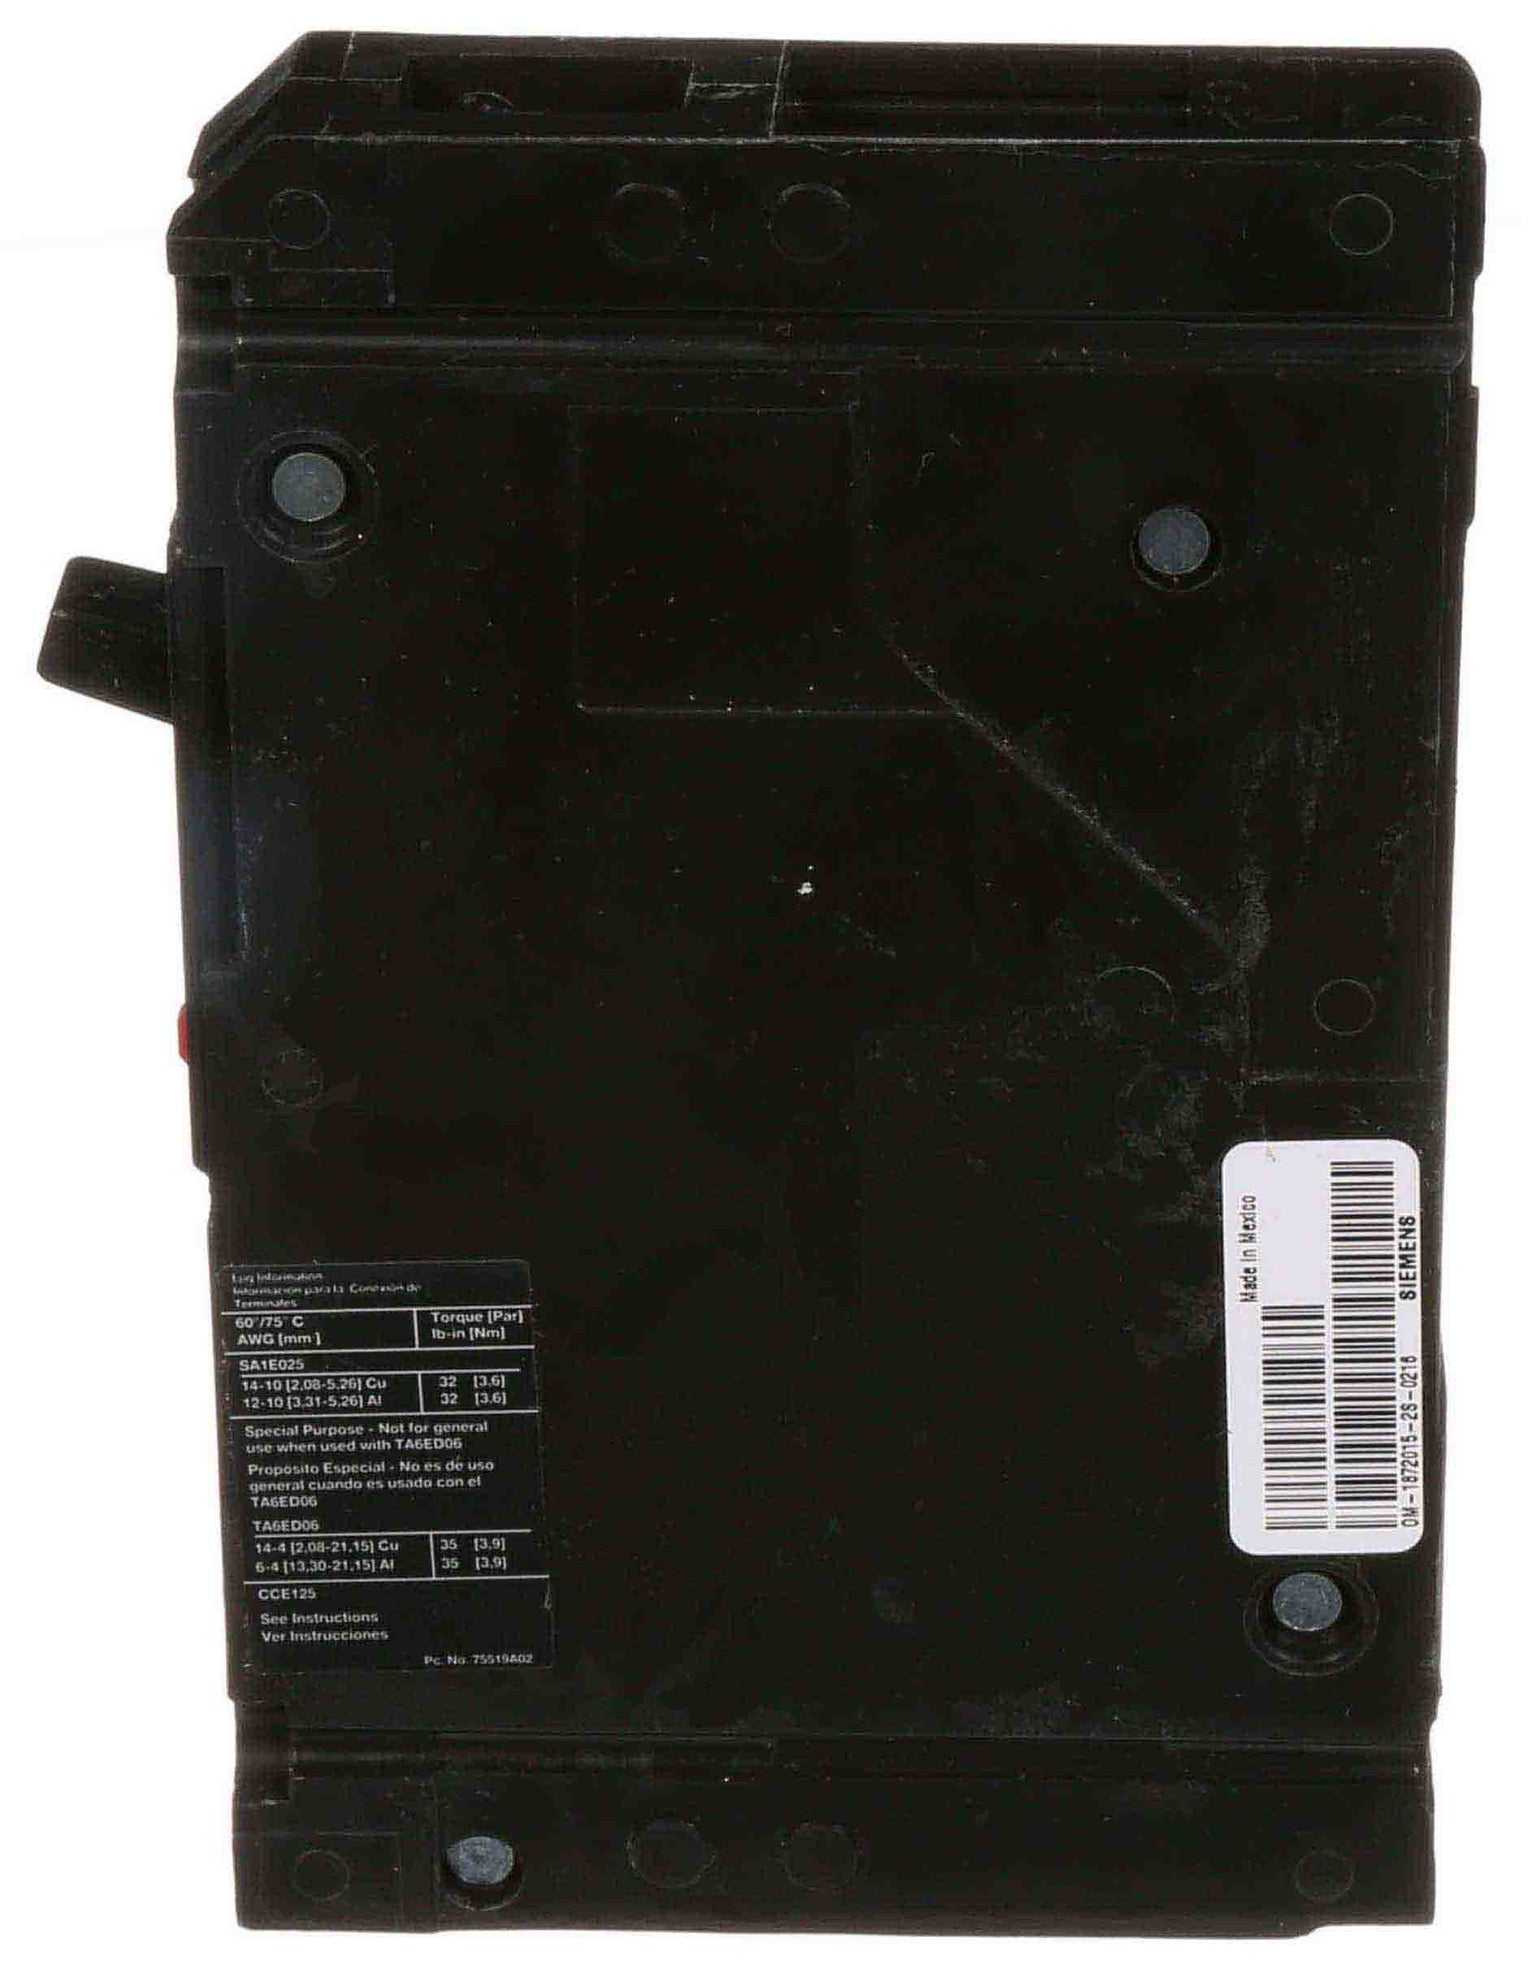 ED21B035L - Siemens - Molded Case Circuit Breaker